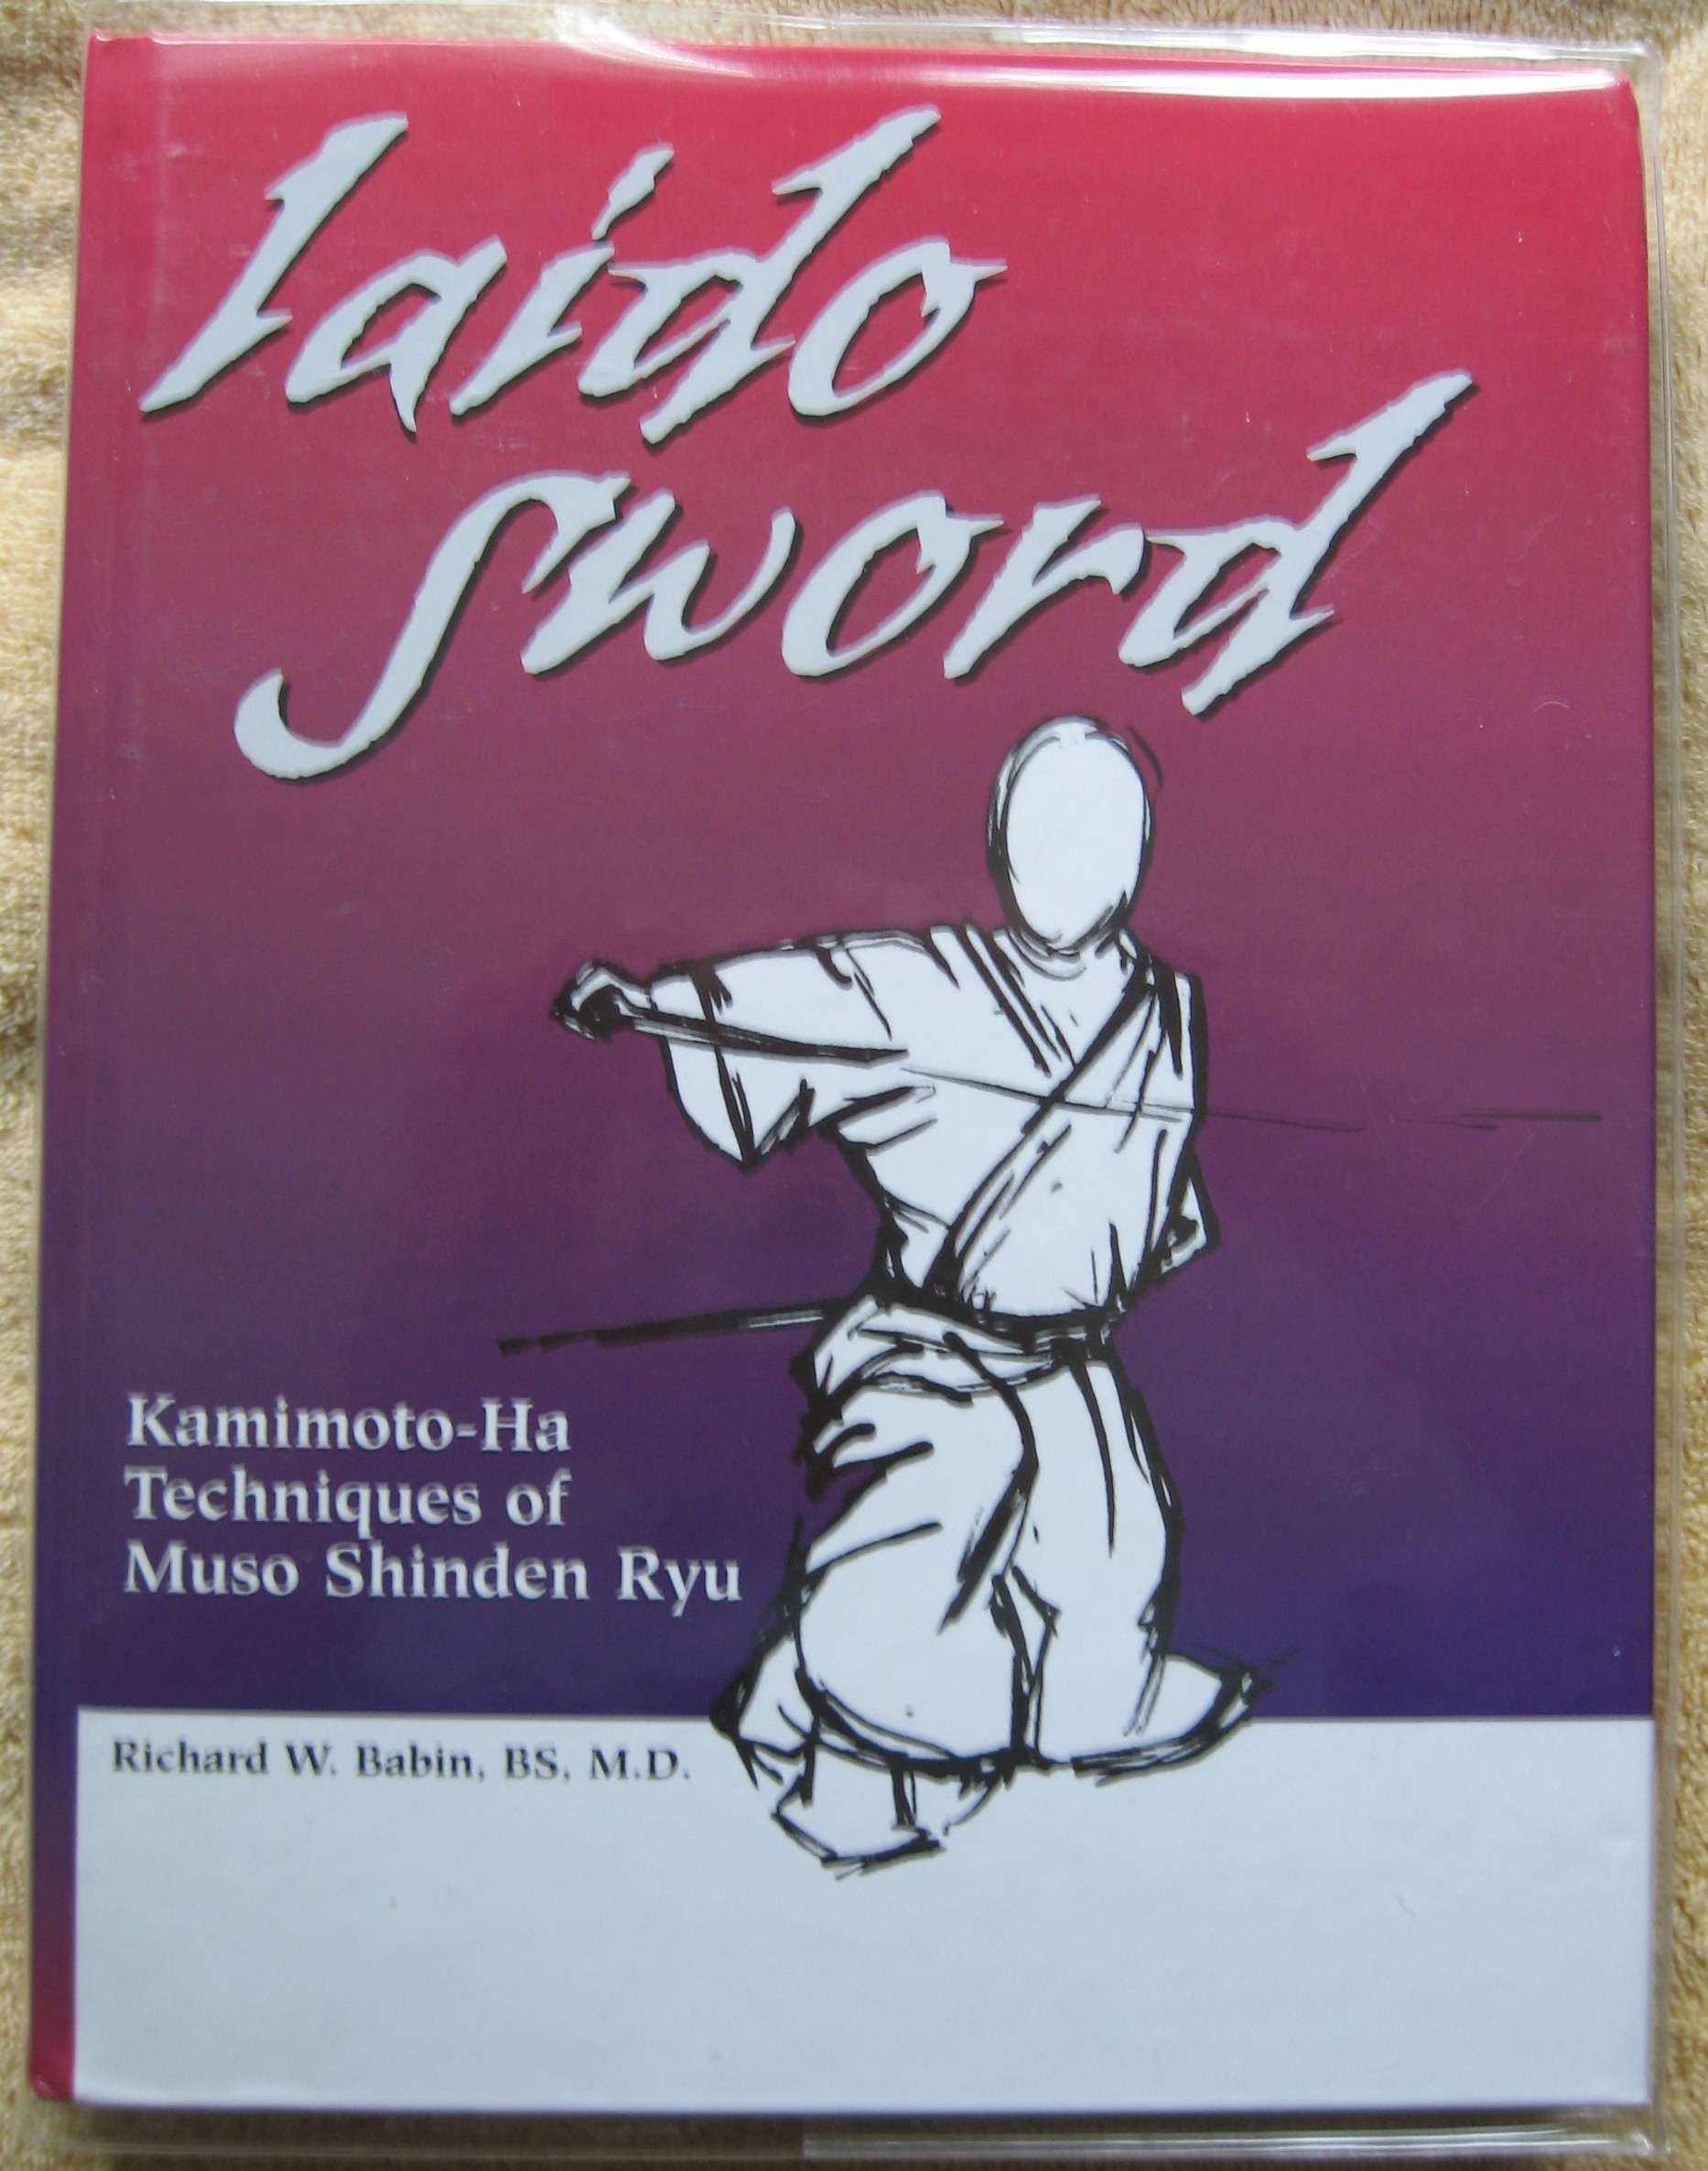 IAIDO SWORD